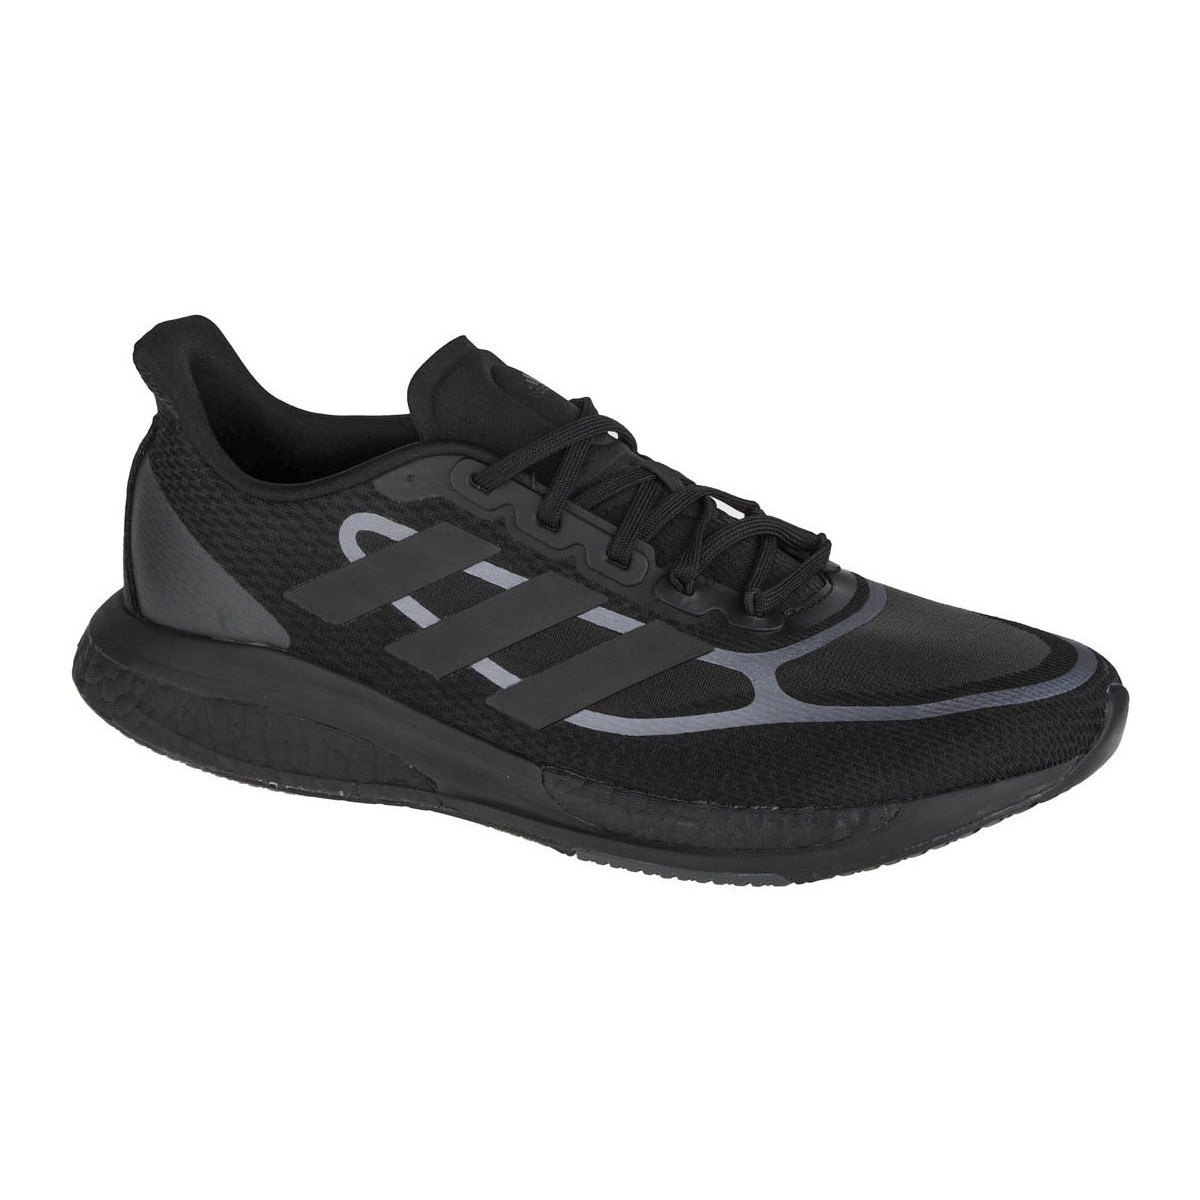 Pantofi Bărbați Trail și running adidas Originals adidas Supernova + Negru